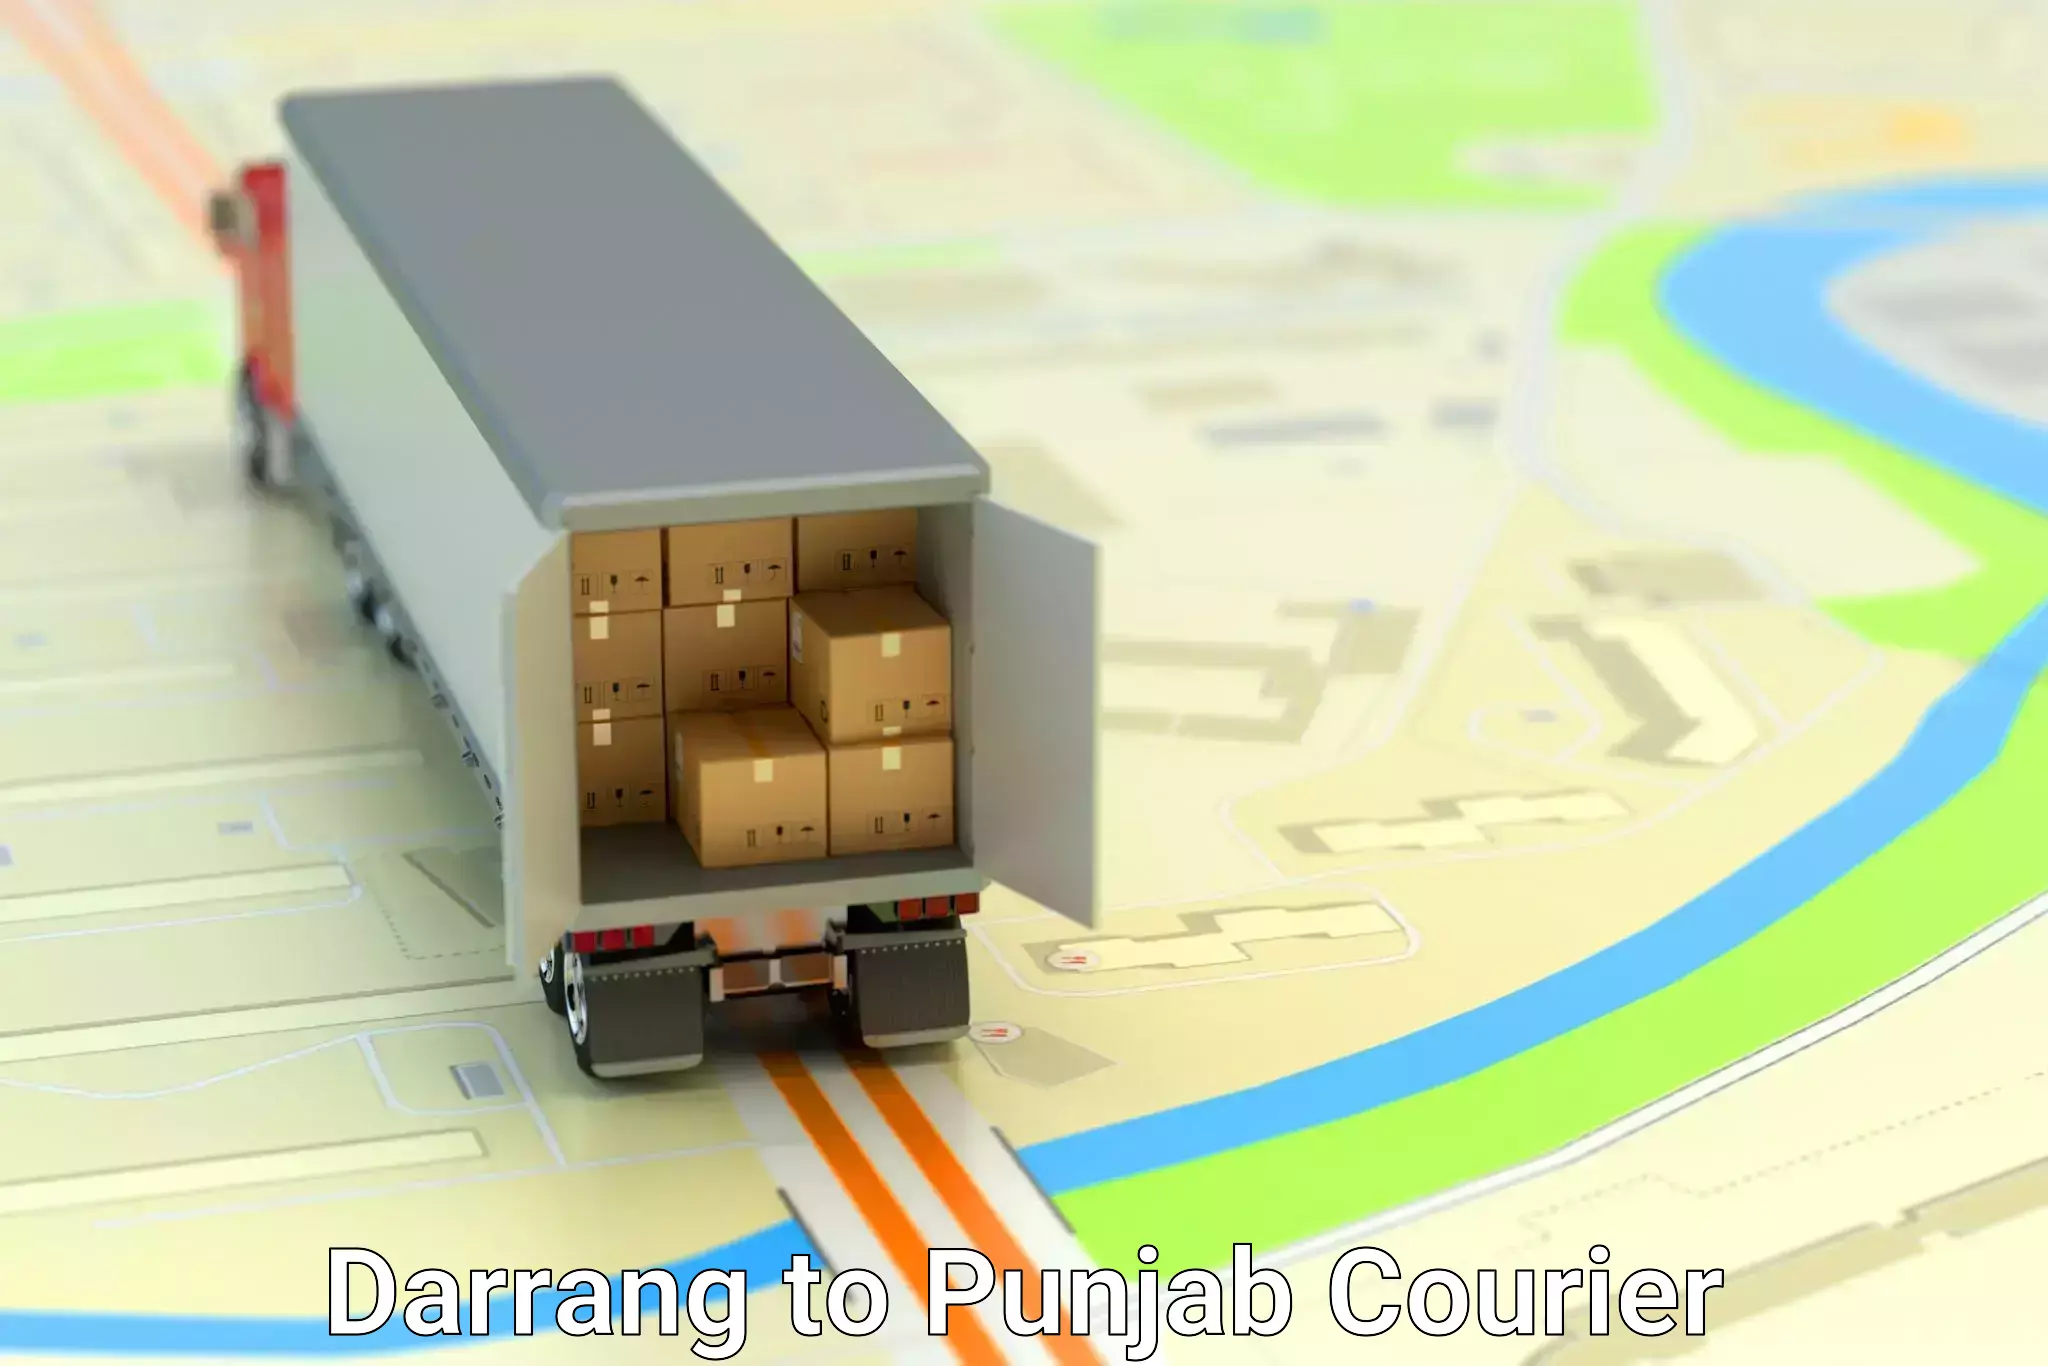 High-performance logistics Darrang to Nangal